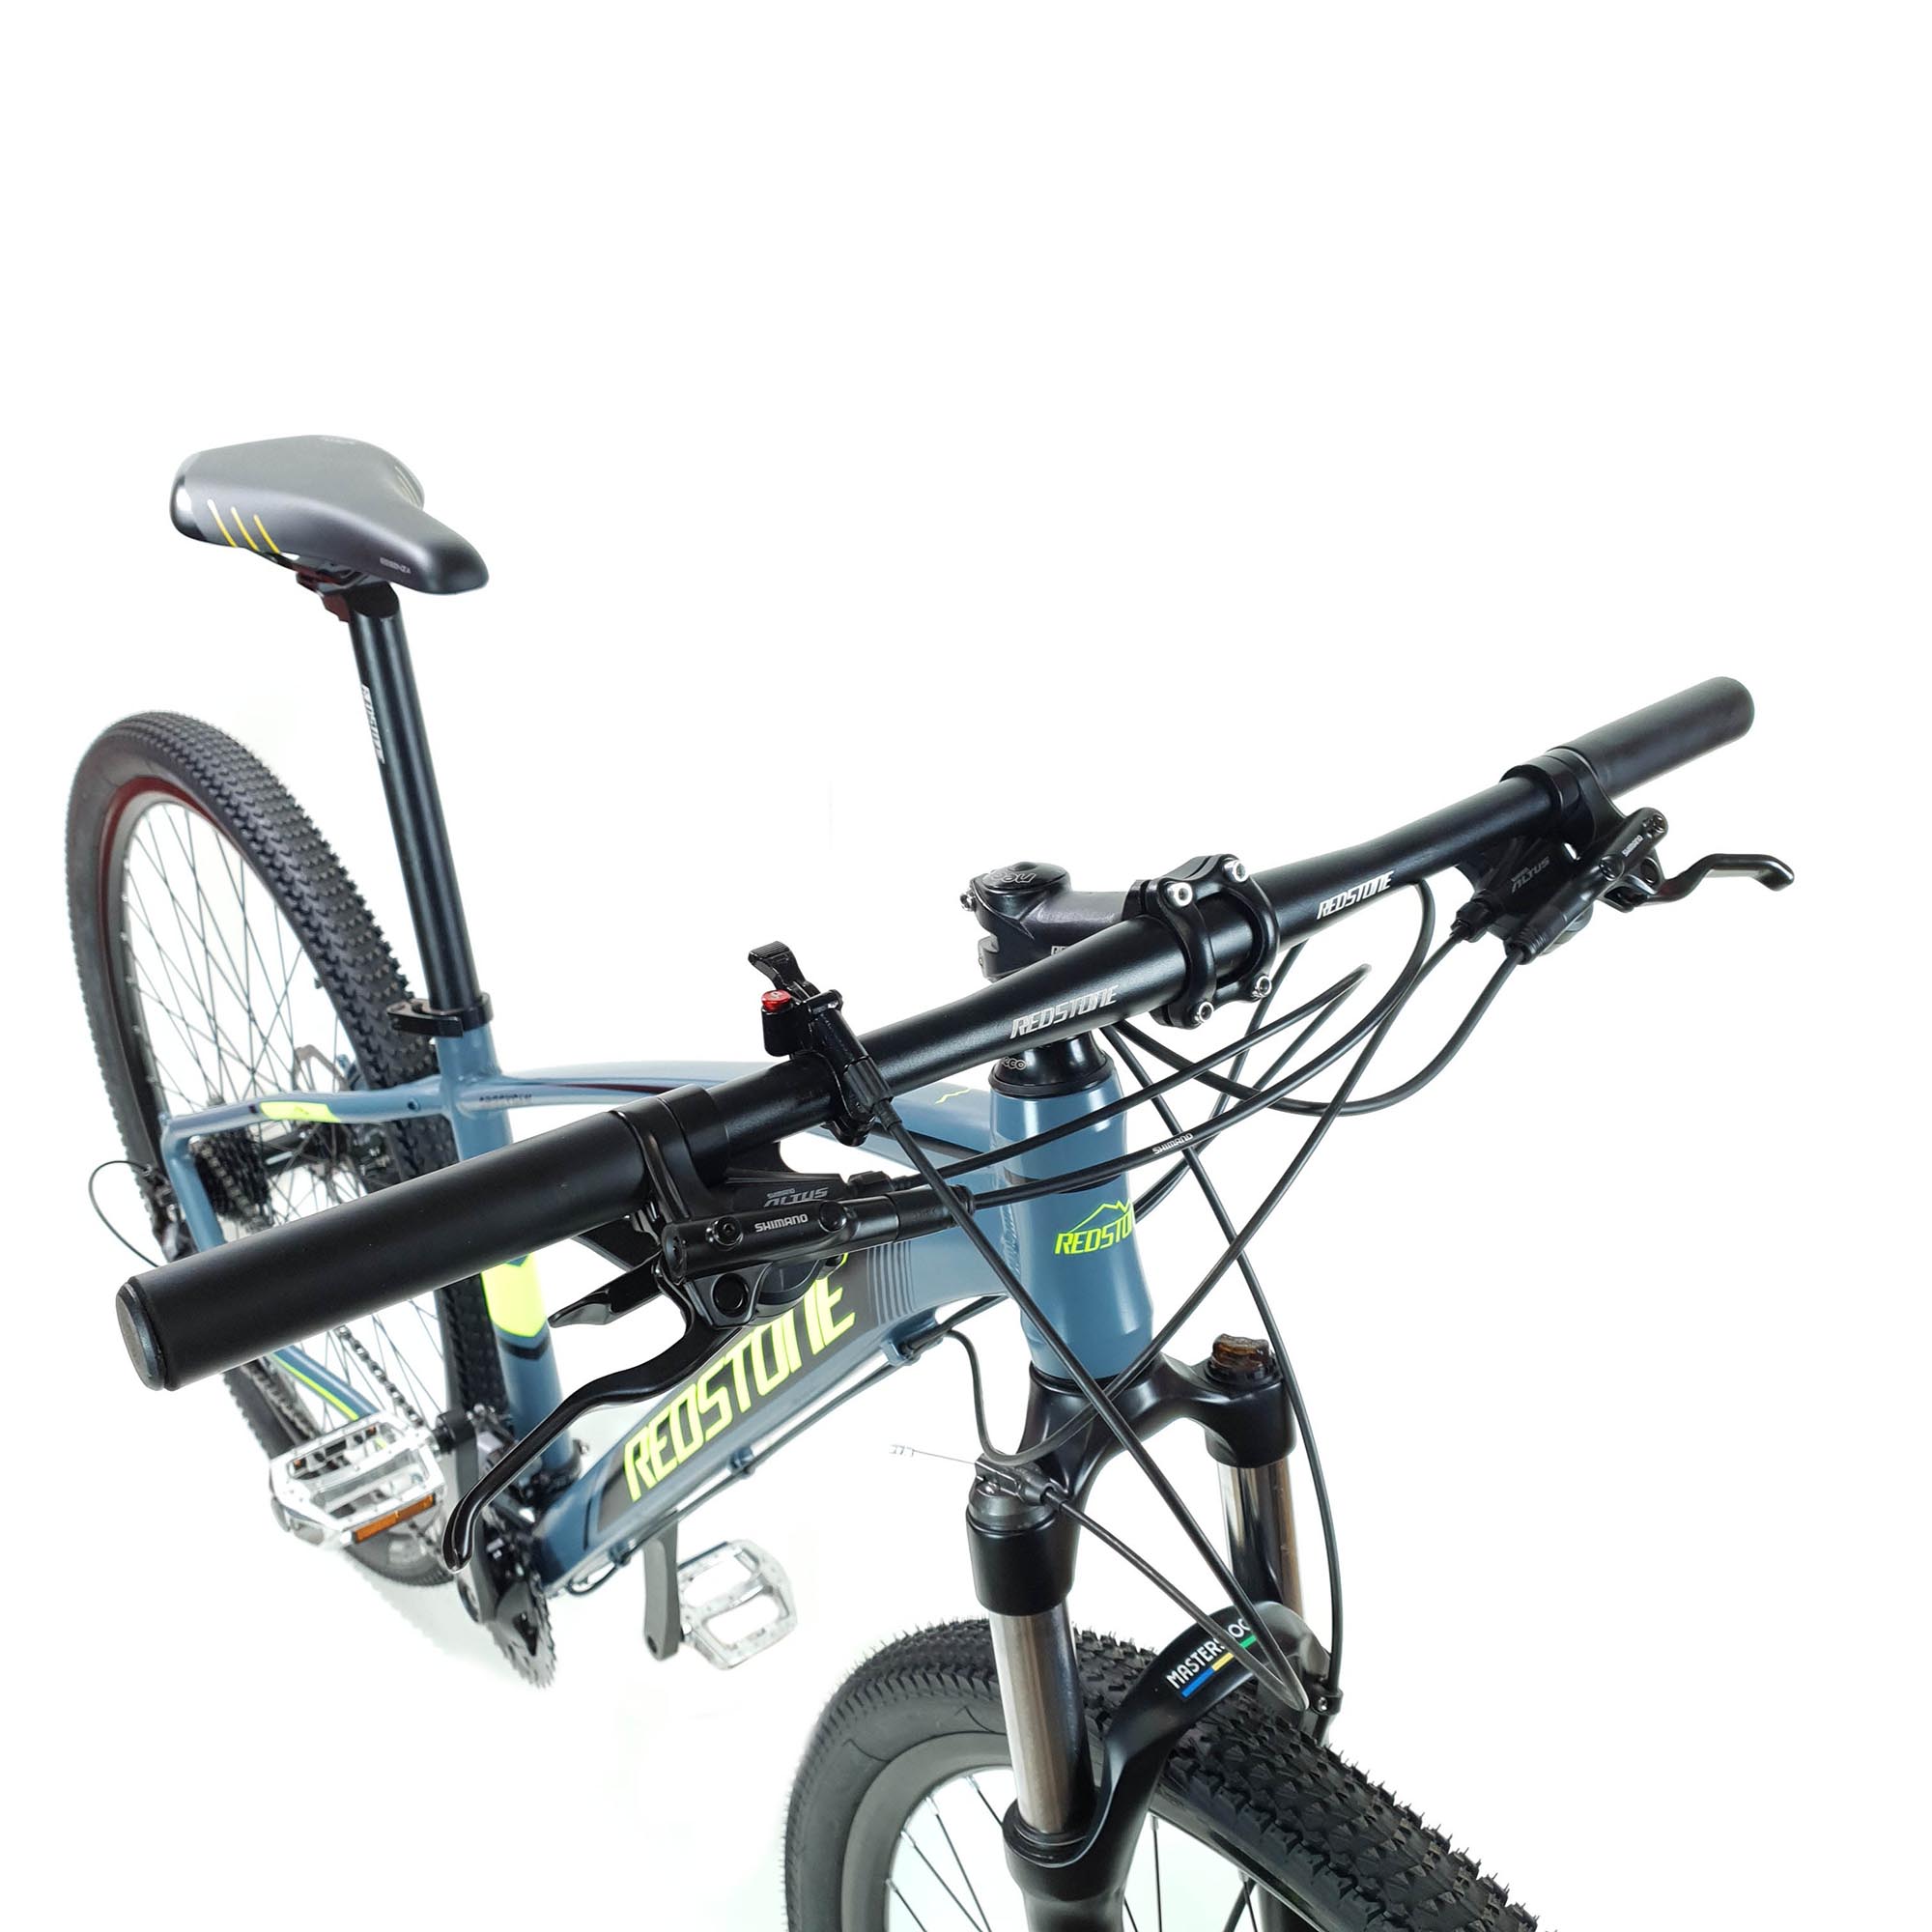 Bicicleta Aro 29 Redstone Aborygem , Suspensão Mastershock, Freio Shimano MT200